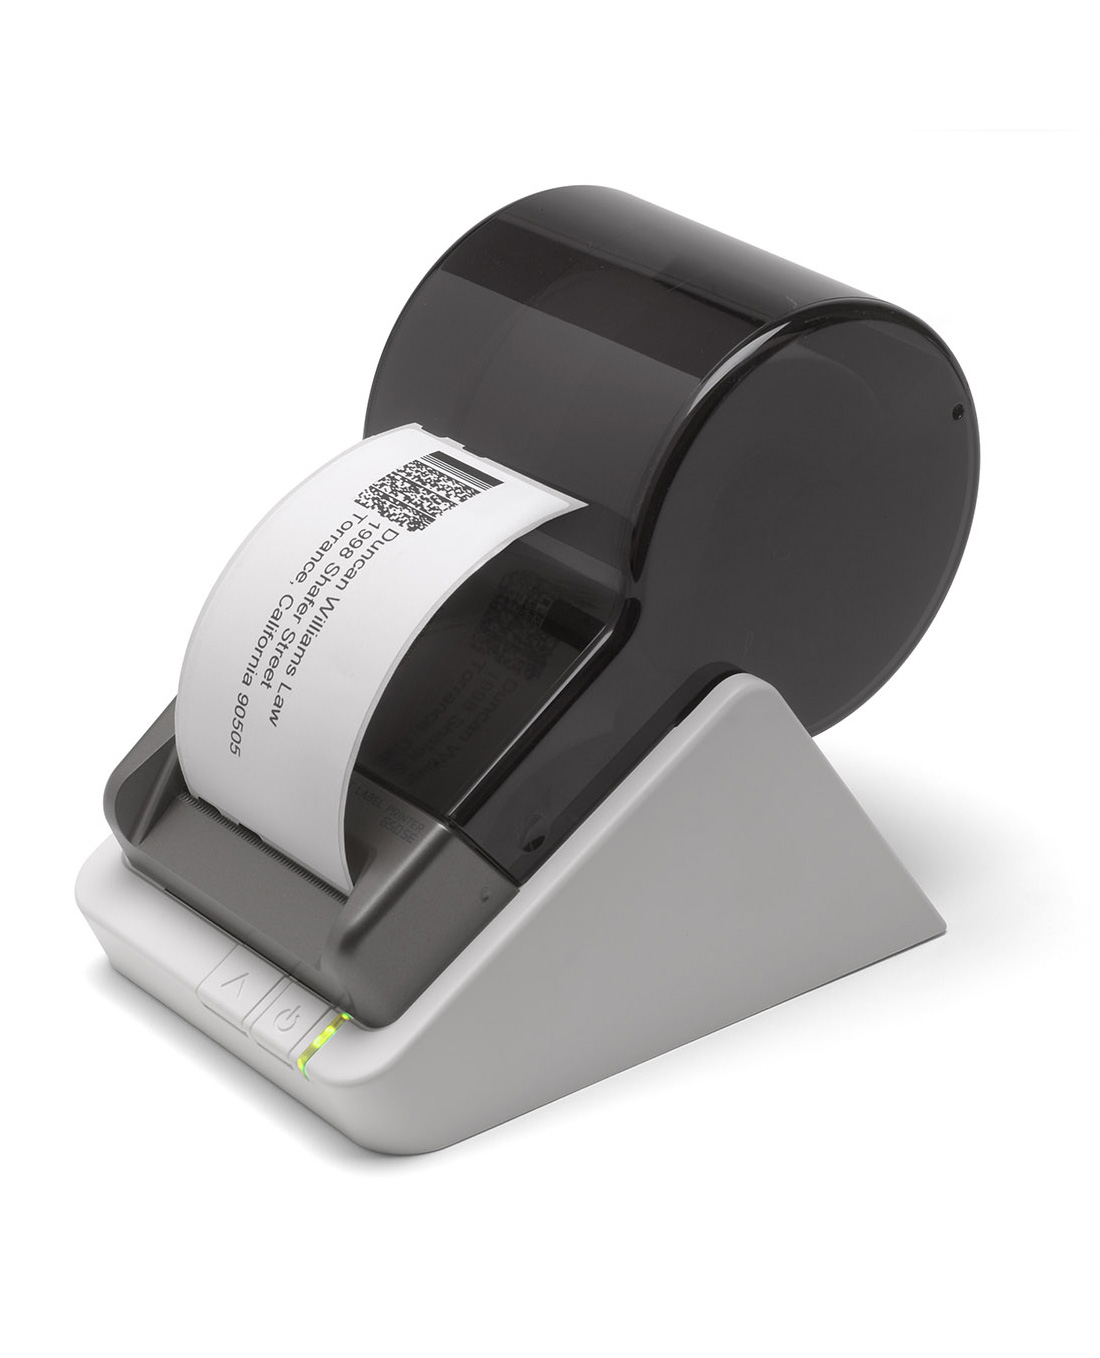 SLP 650SE - Smart Label Printers | Seiko Instruments USA